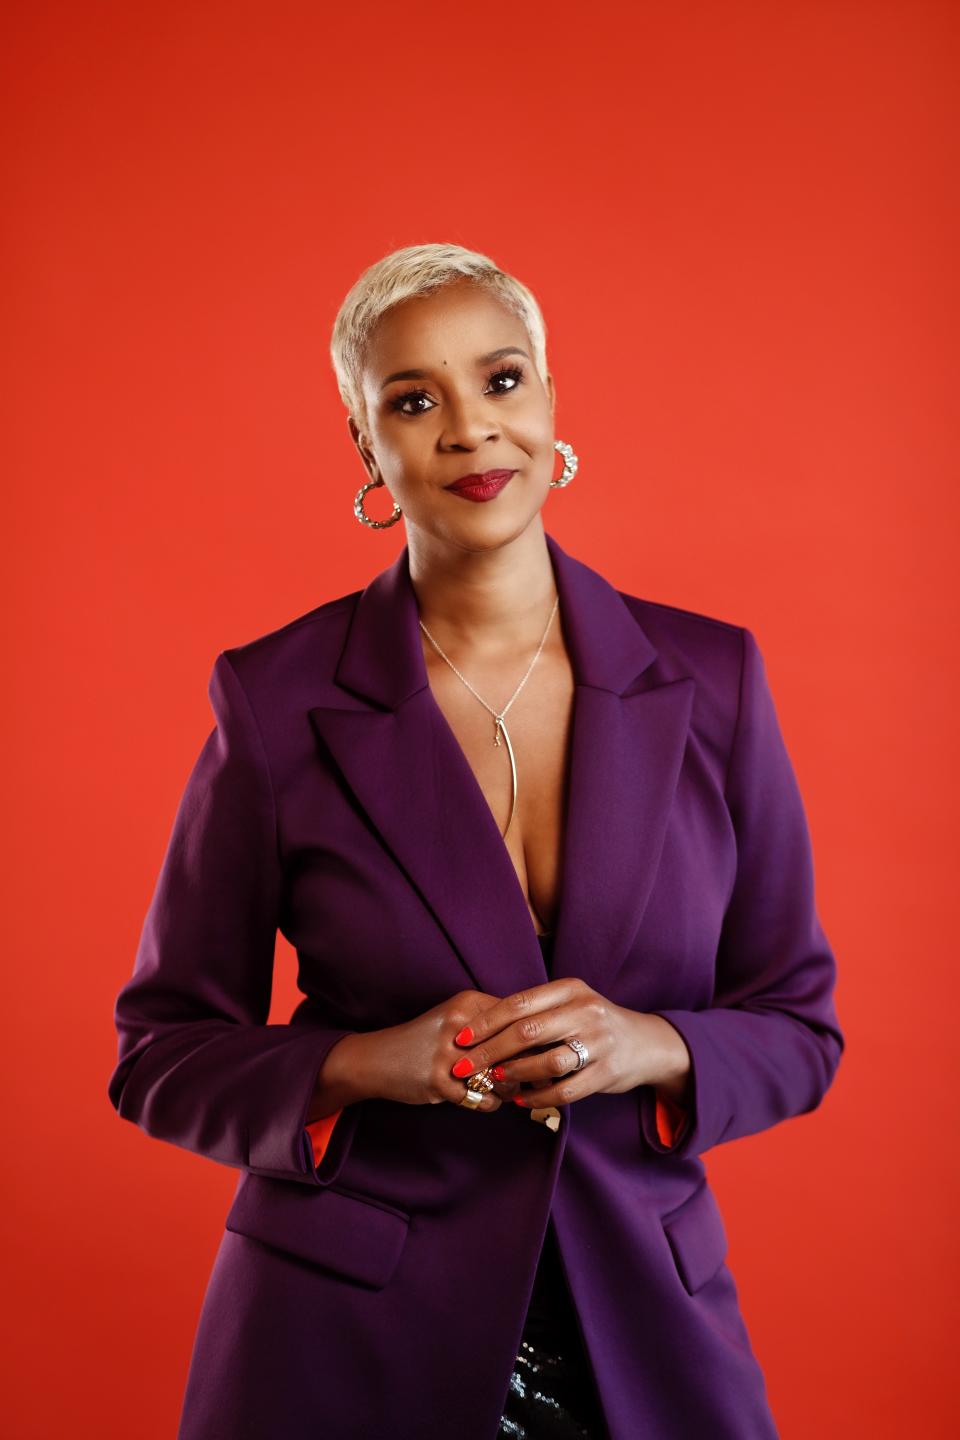 Brandice Daniel, CEO of Harlem’s Fashion Row